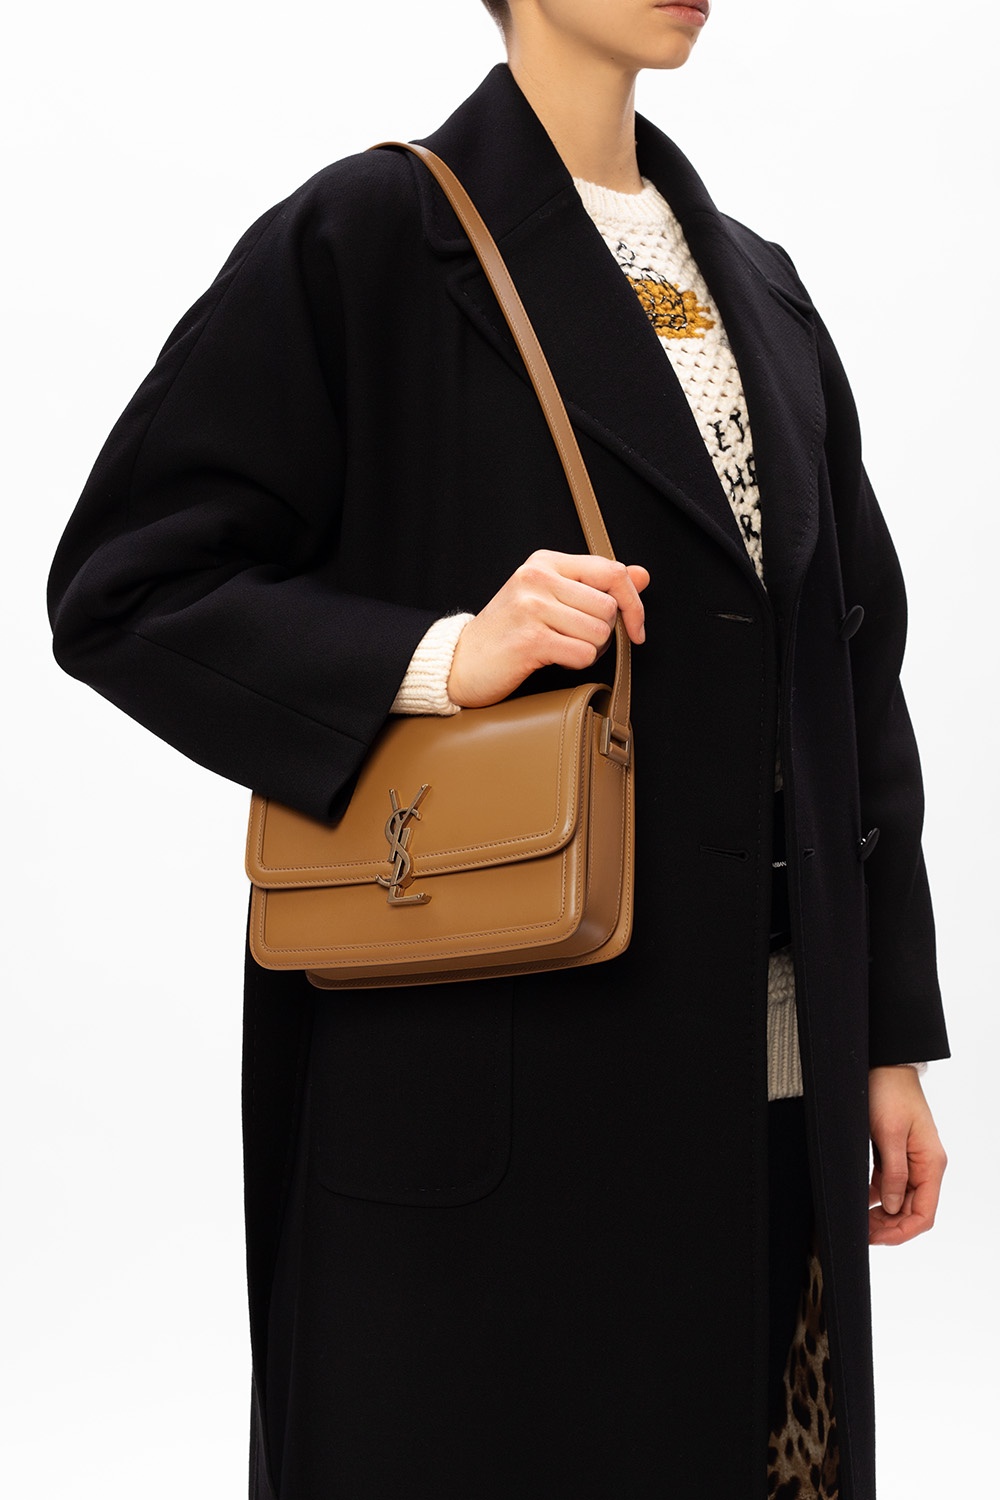 Saint Laurent Solferino Medium Shoulder Bag in Brown for Men